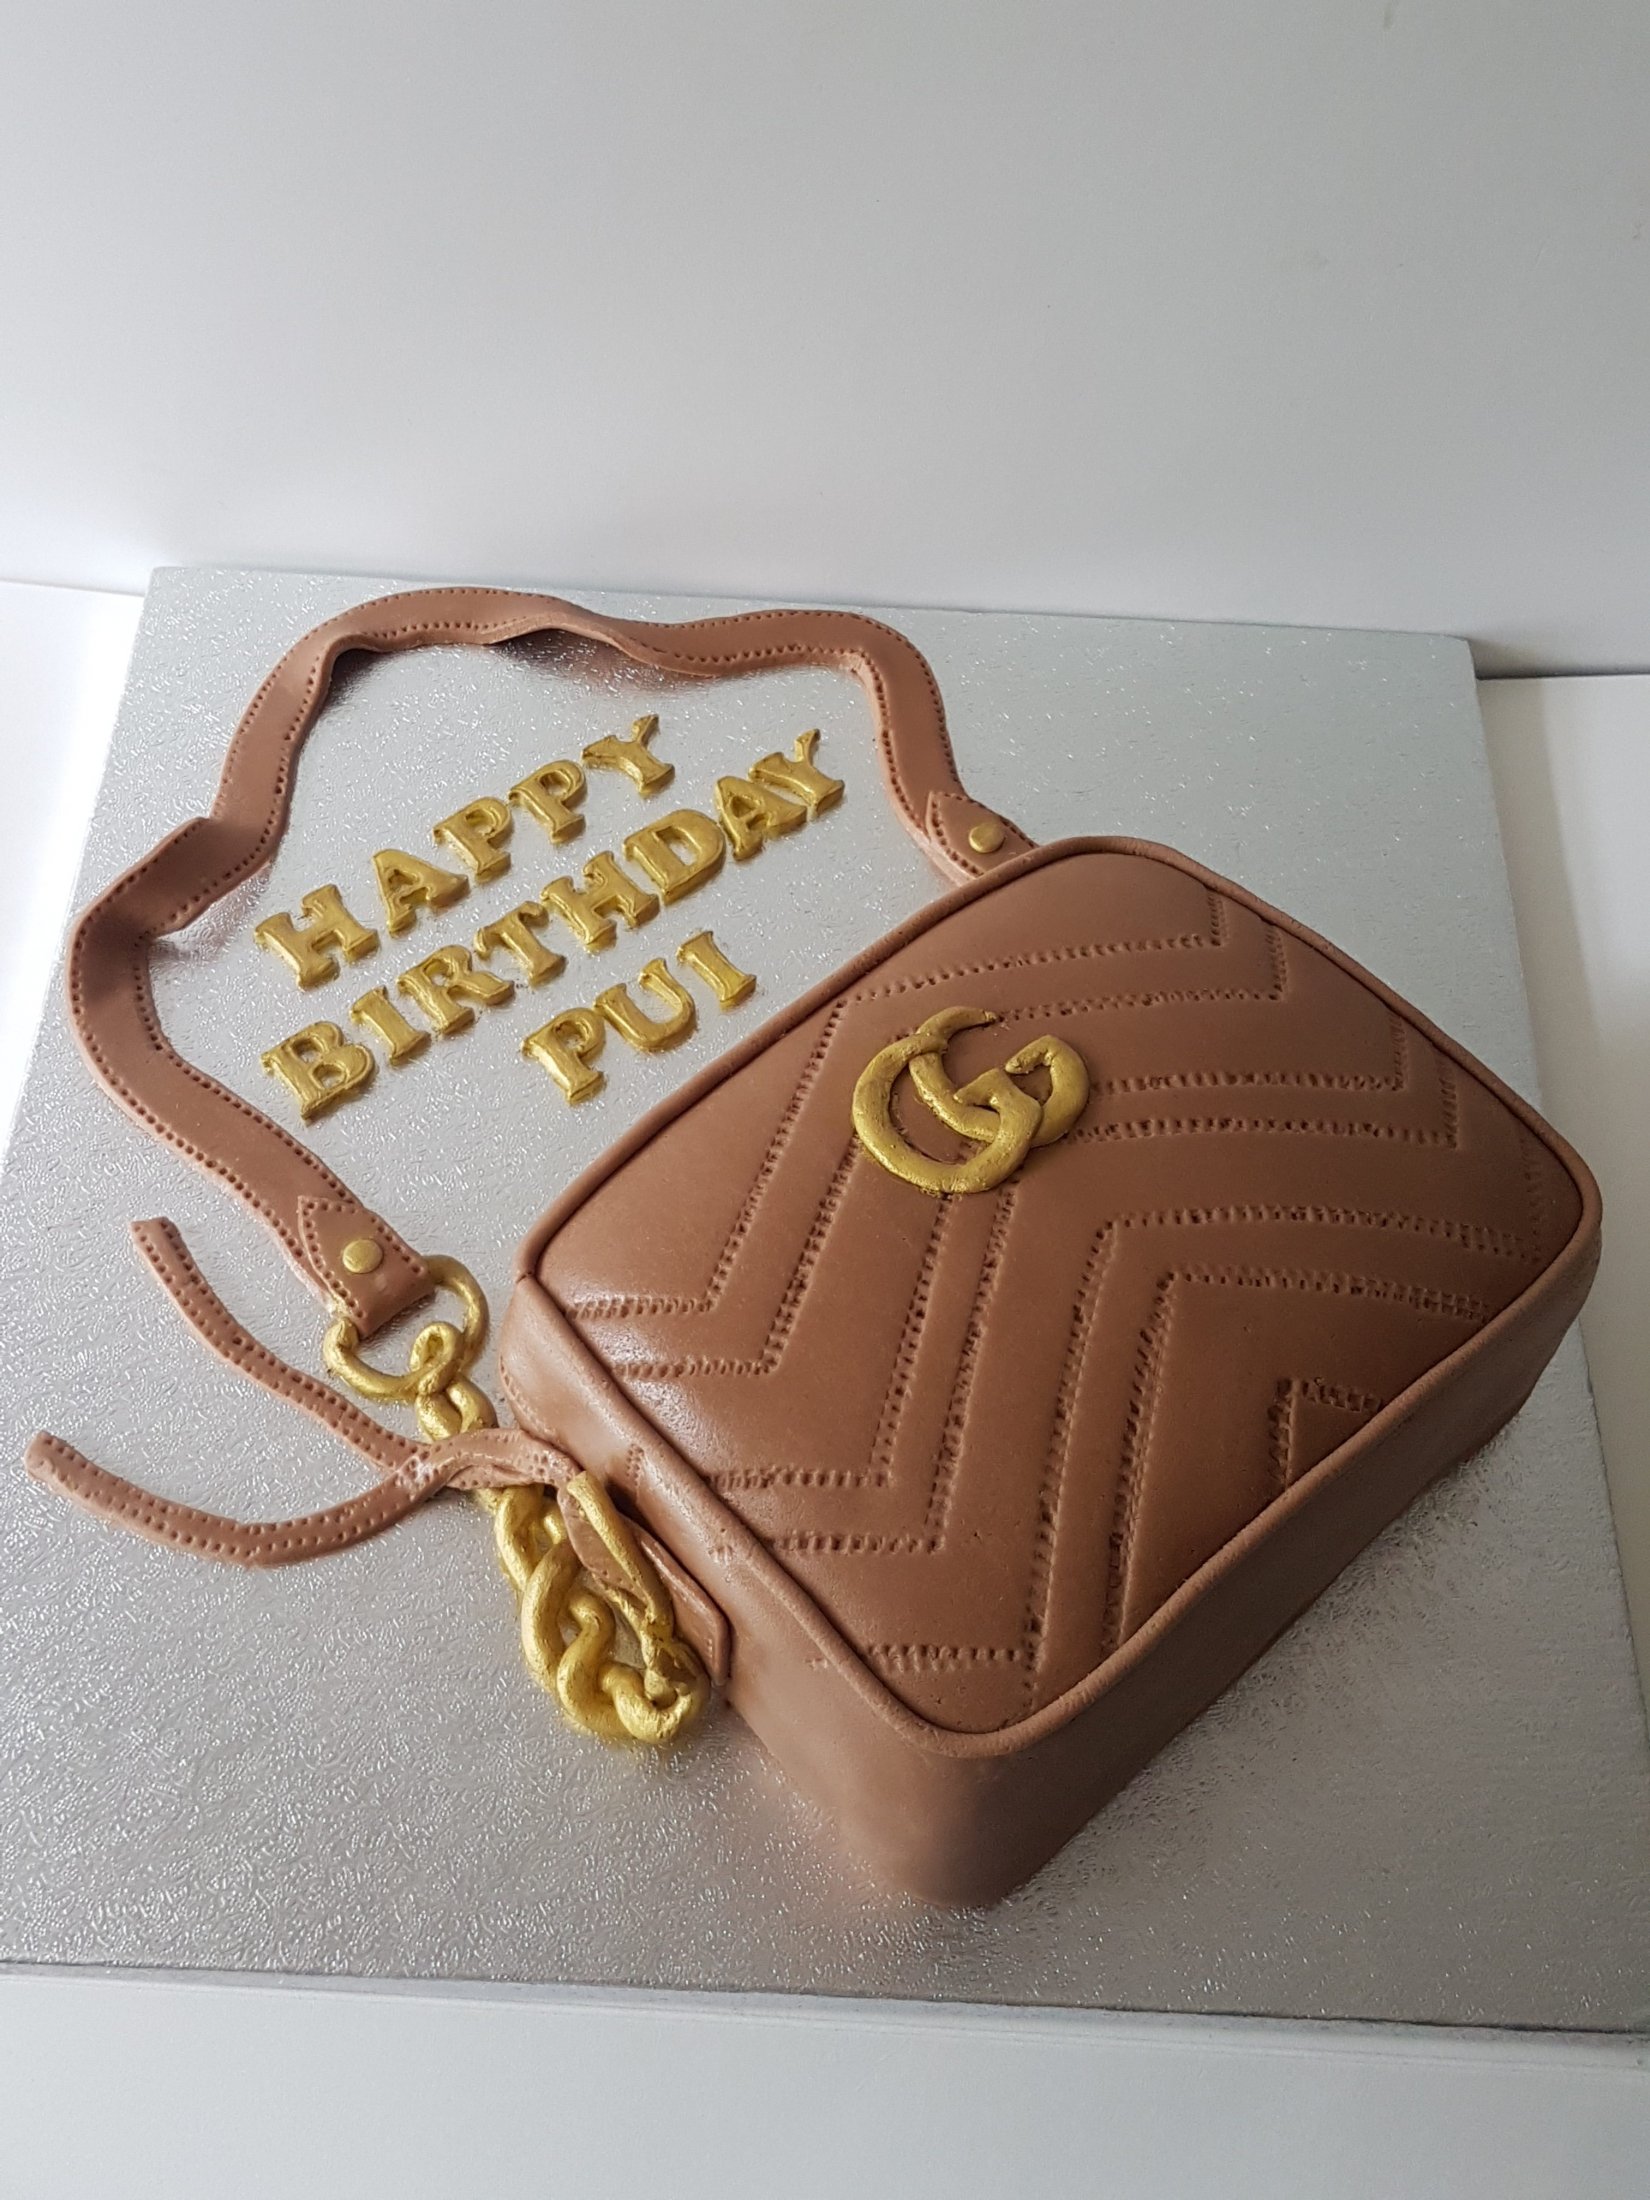 55 Most Delicious Chanel Purse Cakes | Bragmybag | Purse cake, Chanel purse,  Purses